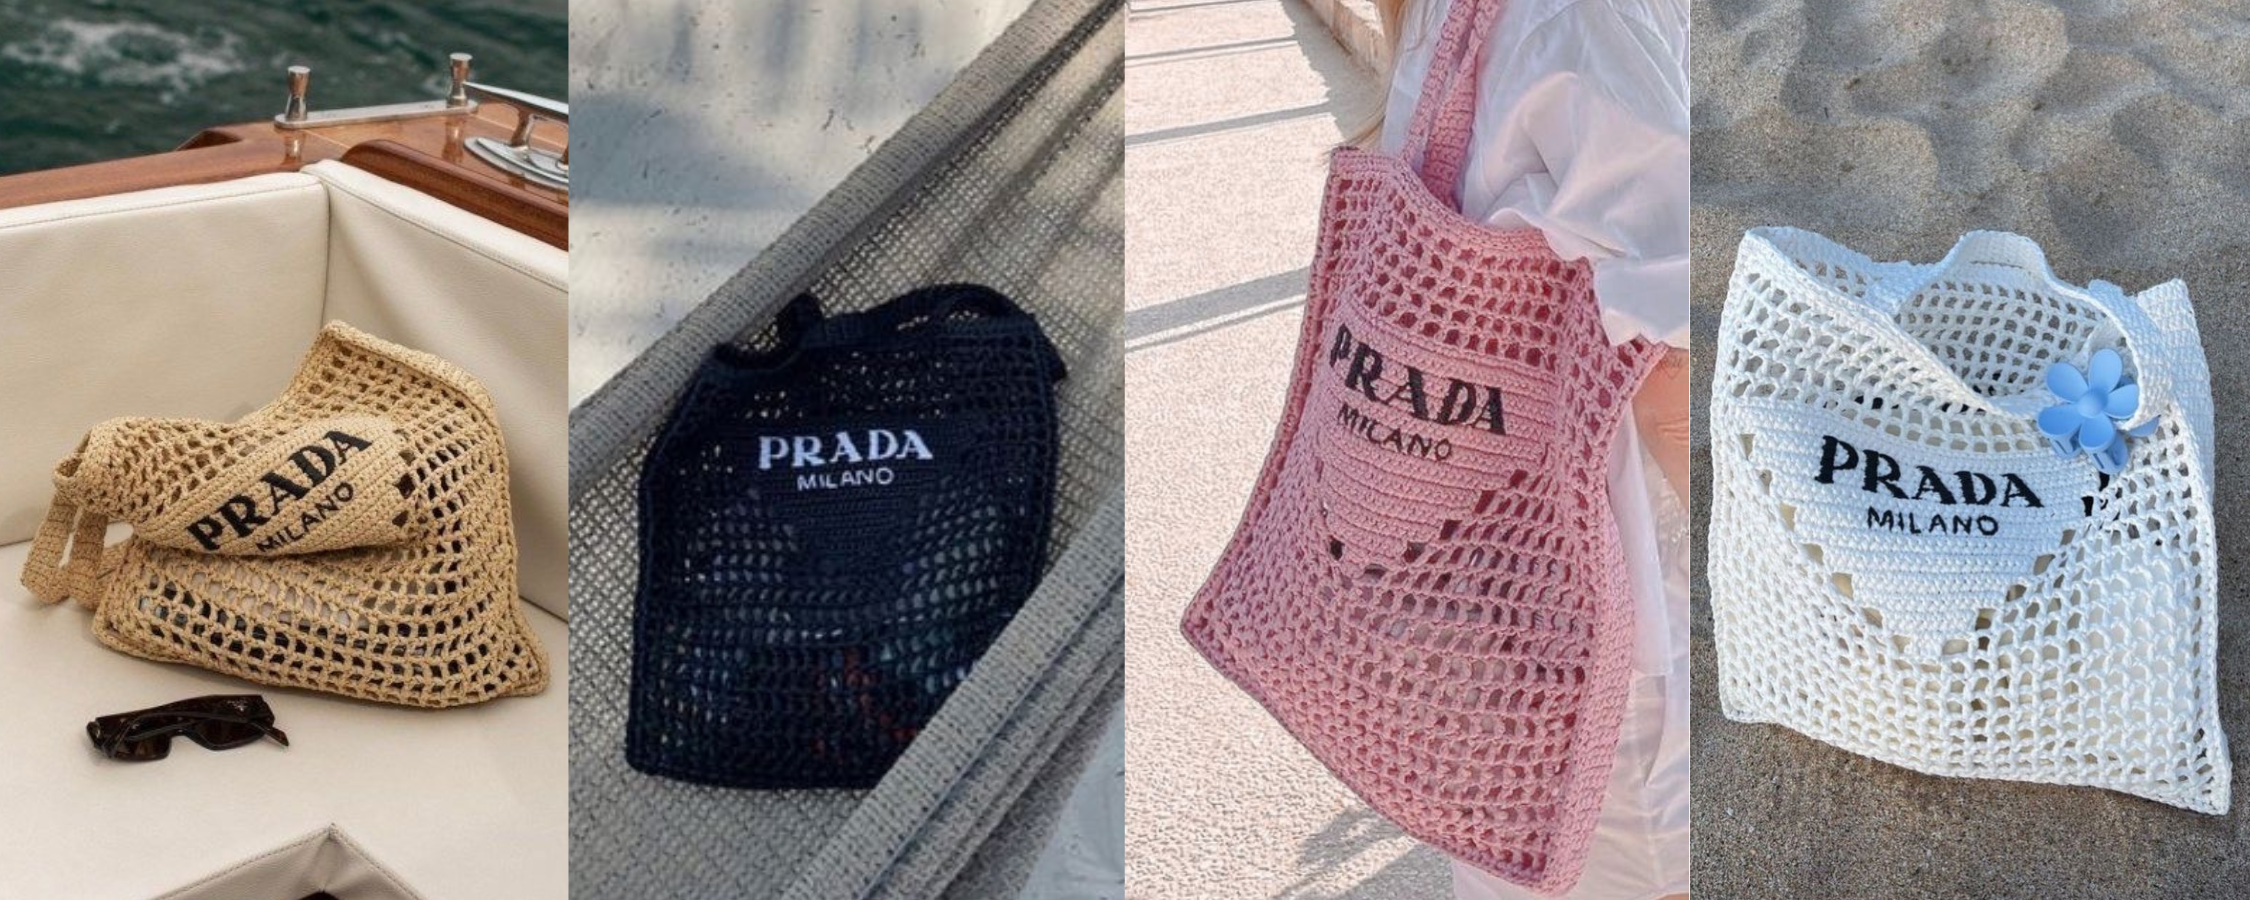 PRADA BAGS: A TIMELESS STAPLE